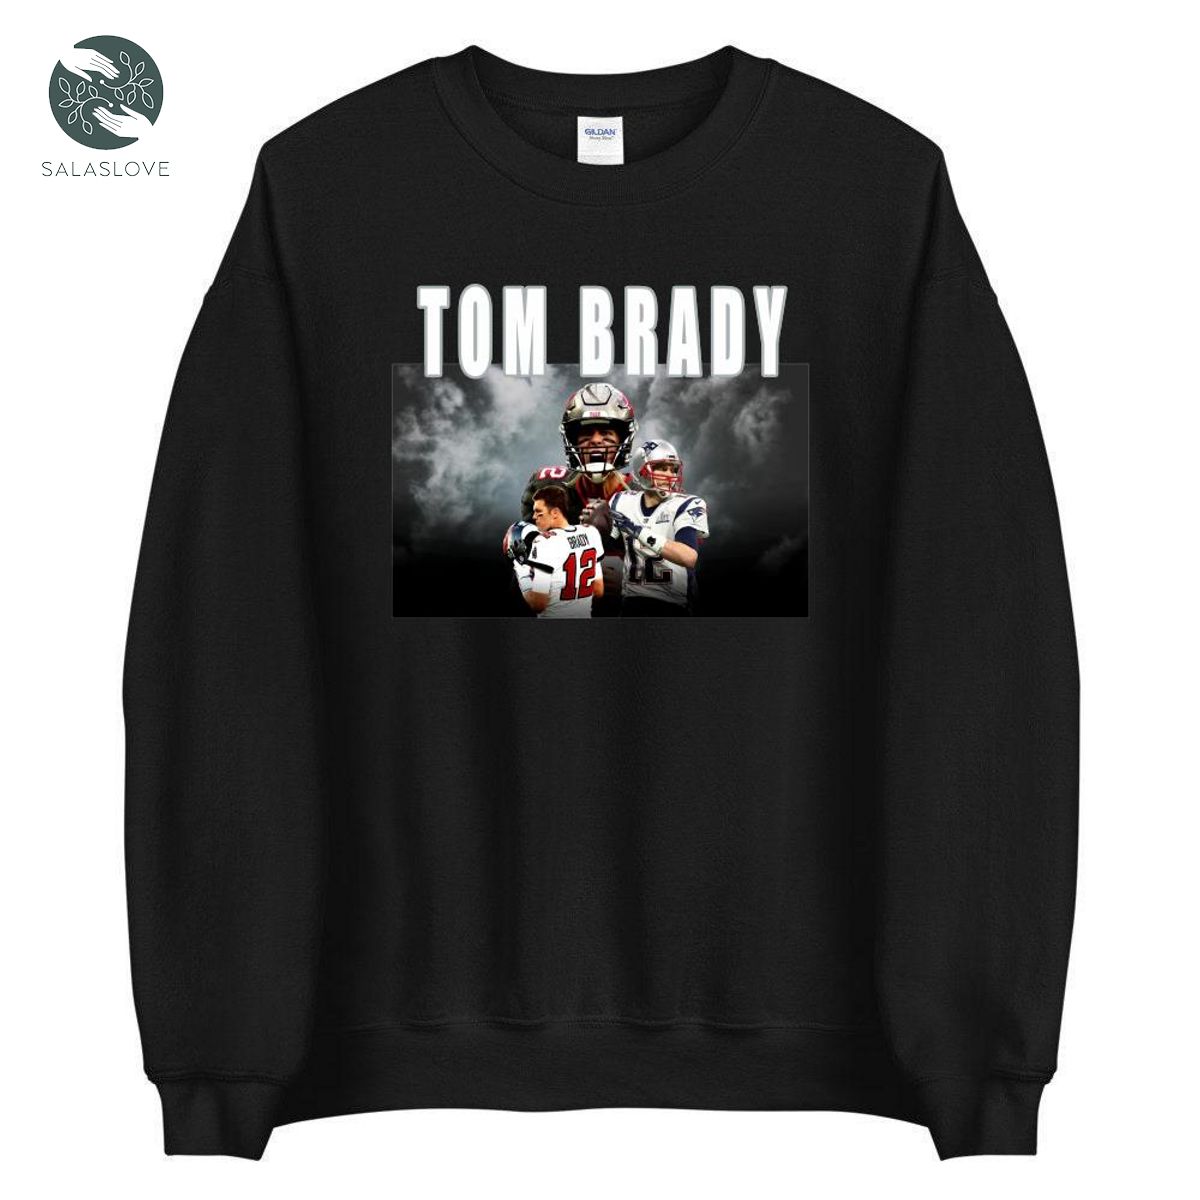 Tom Brady Retro 90s Bootleg Shirt Gift for Football Fan